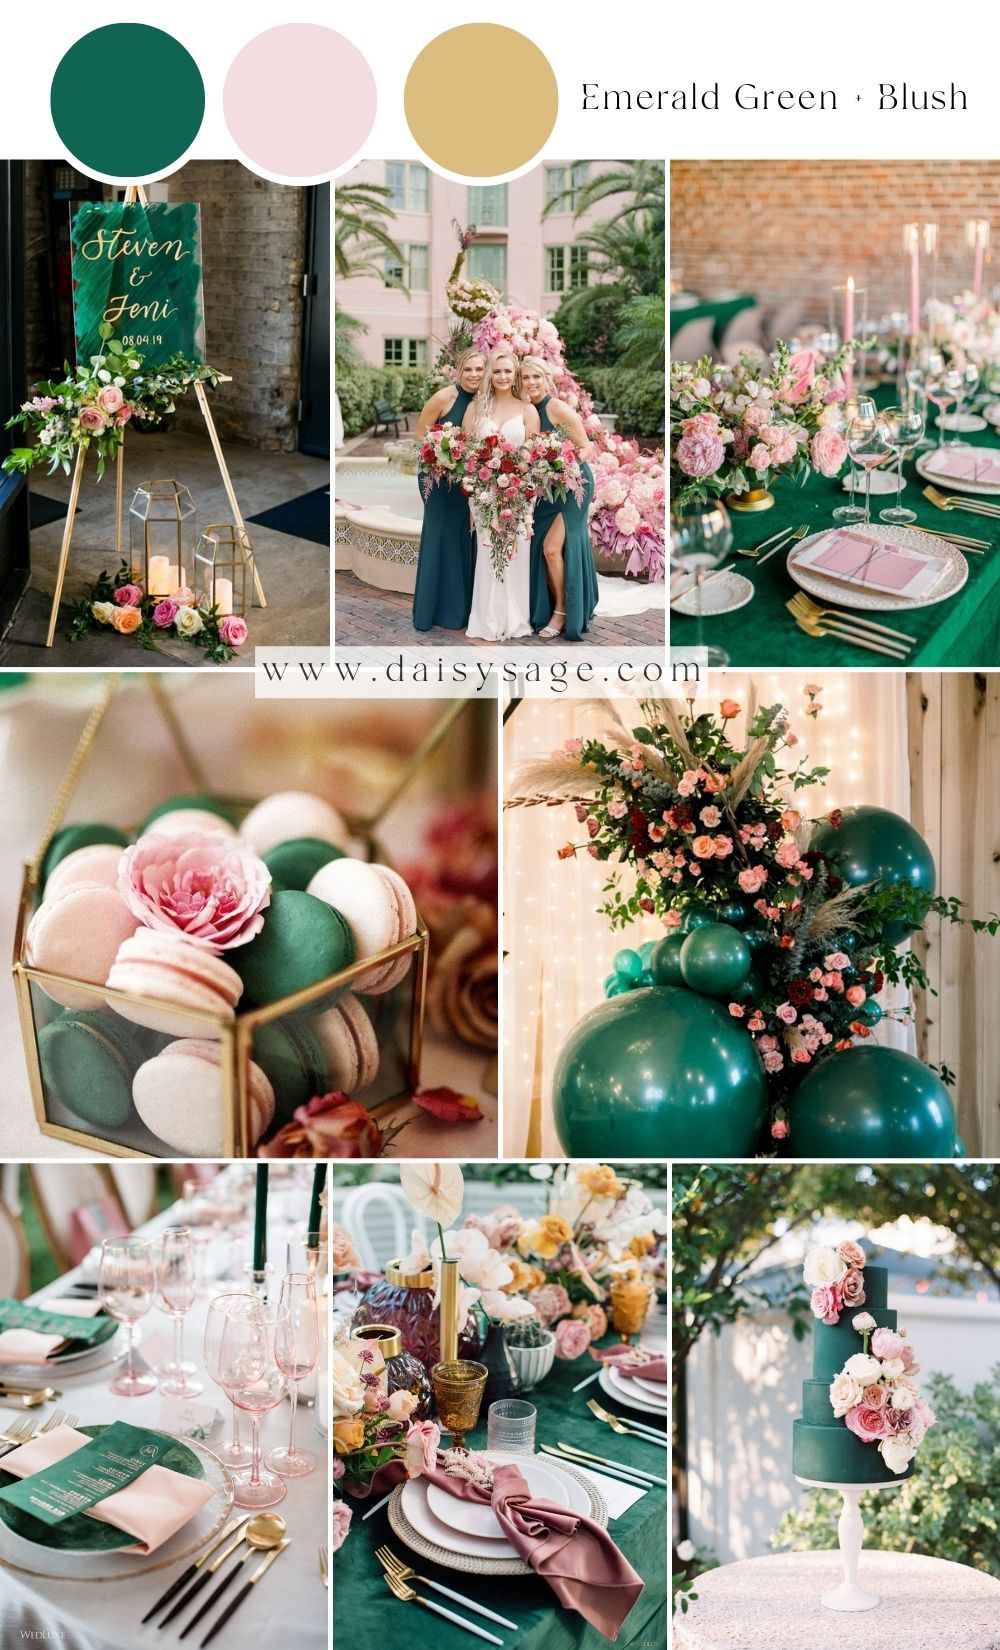 Emerald Green and Blush Wedding Color Scheme